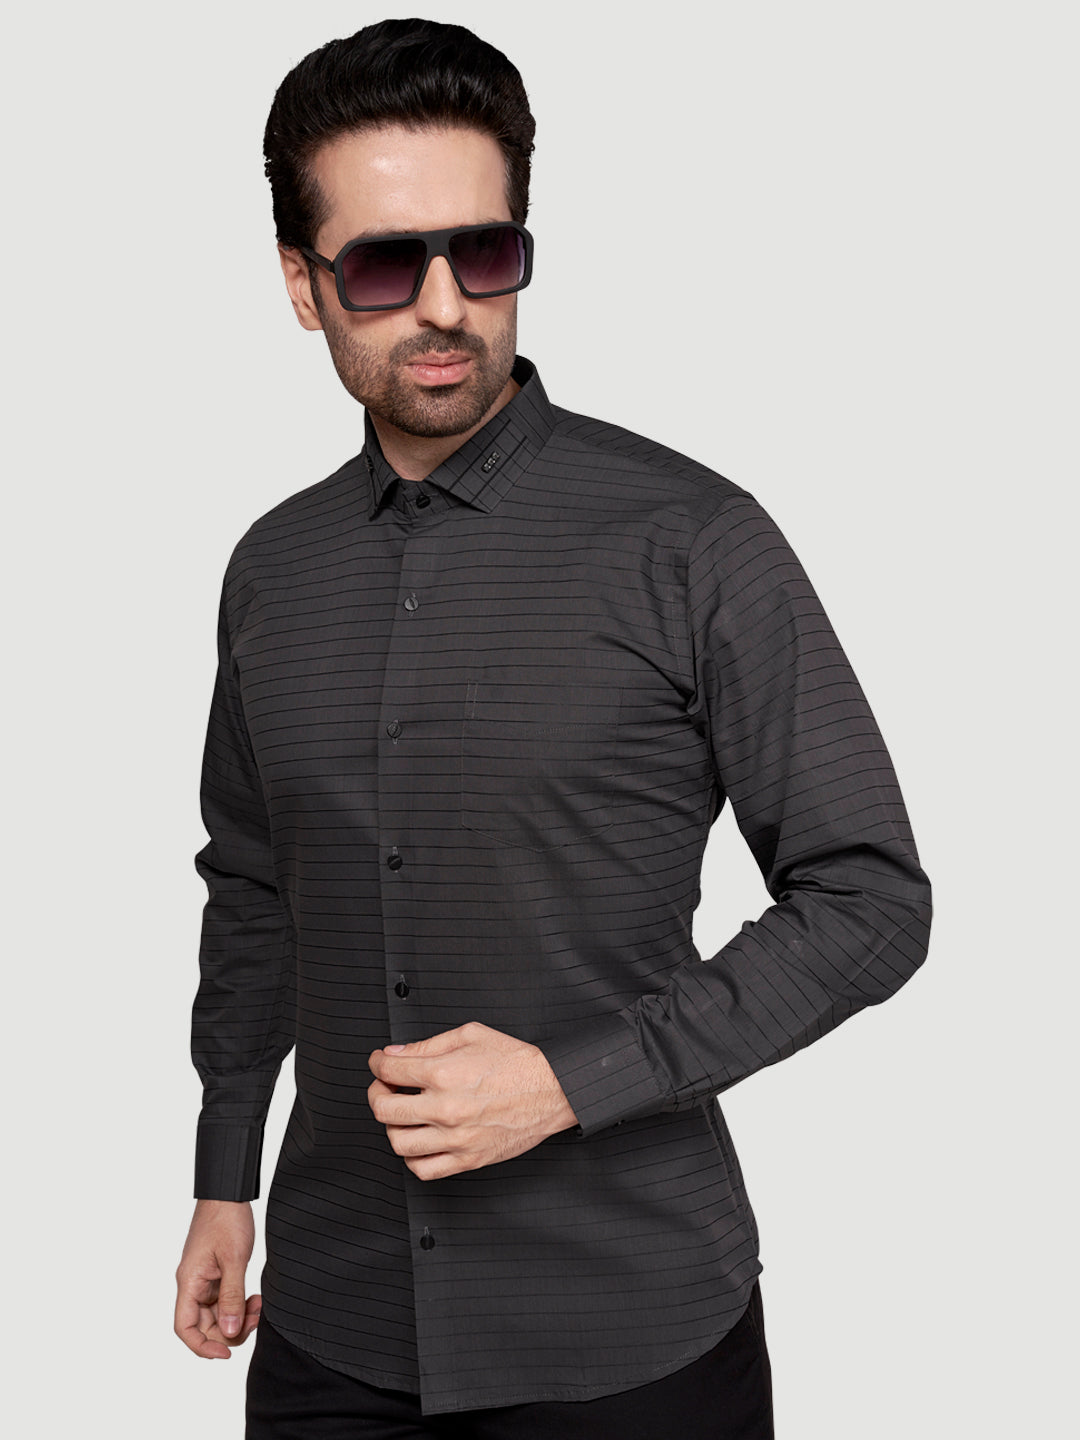 Black & White Men's Designer Weft Shirt with Collar Accessory Grey